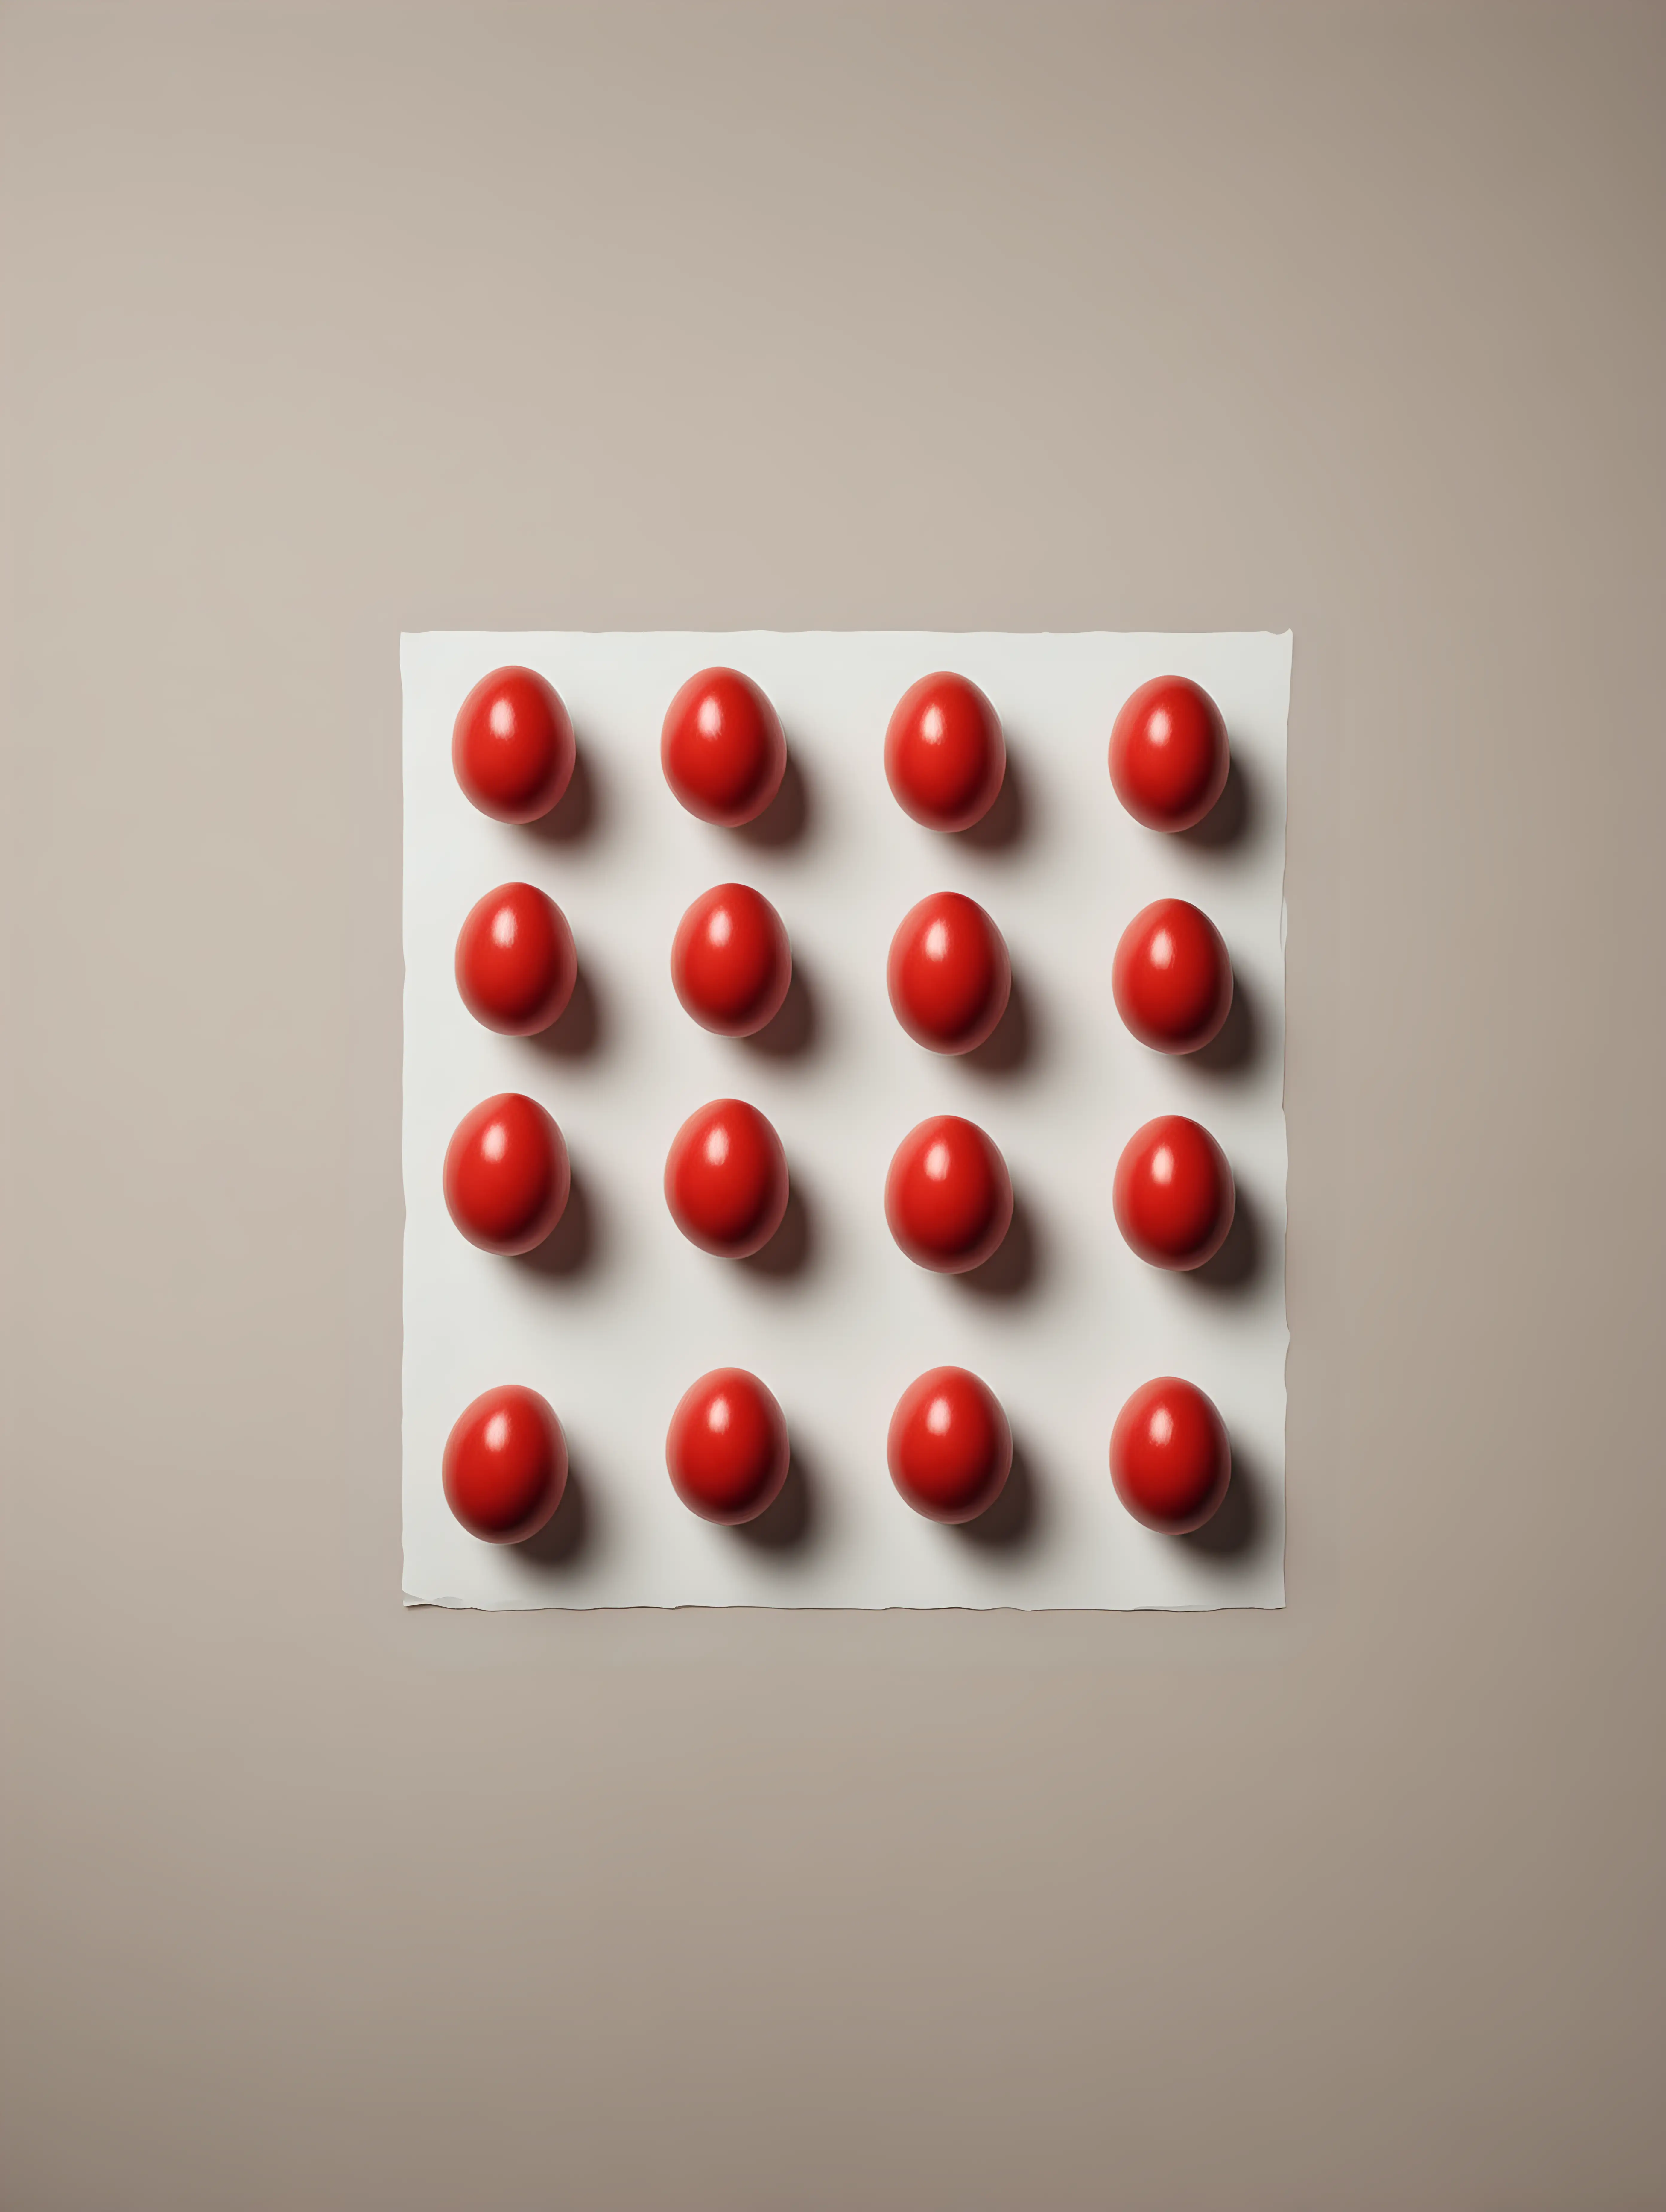 Japanese Minimalist Red Eggs Arrangement on White Background